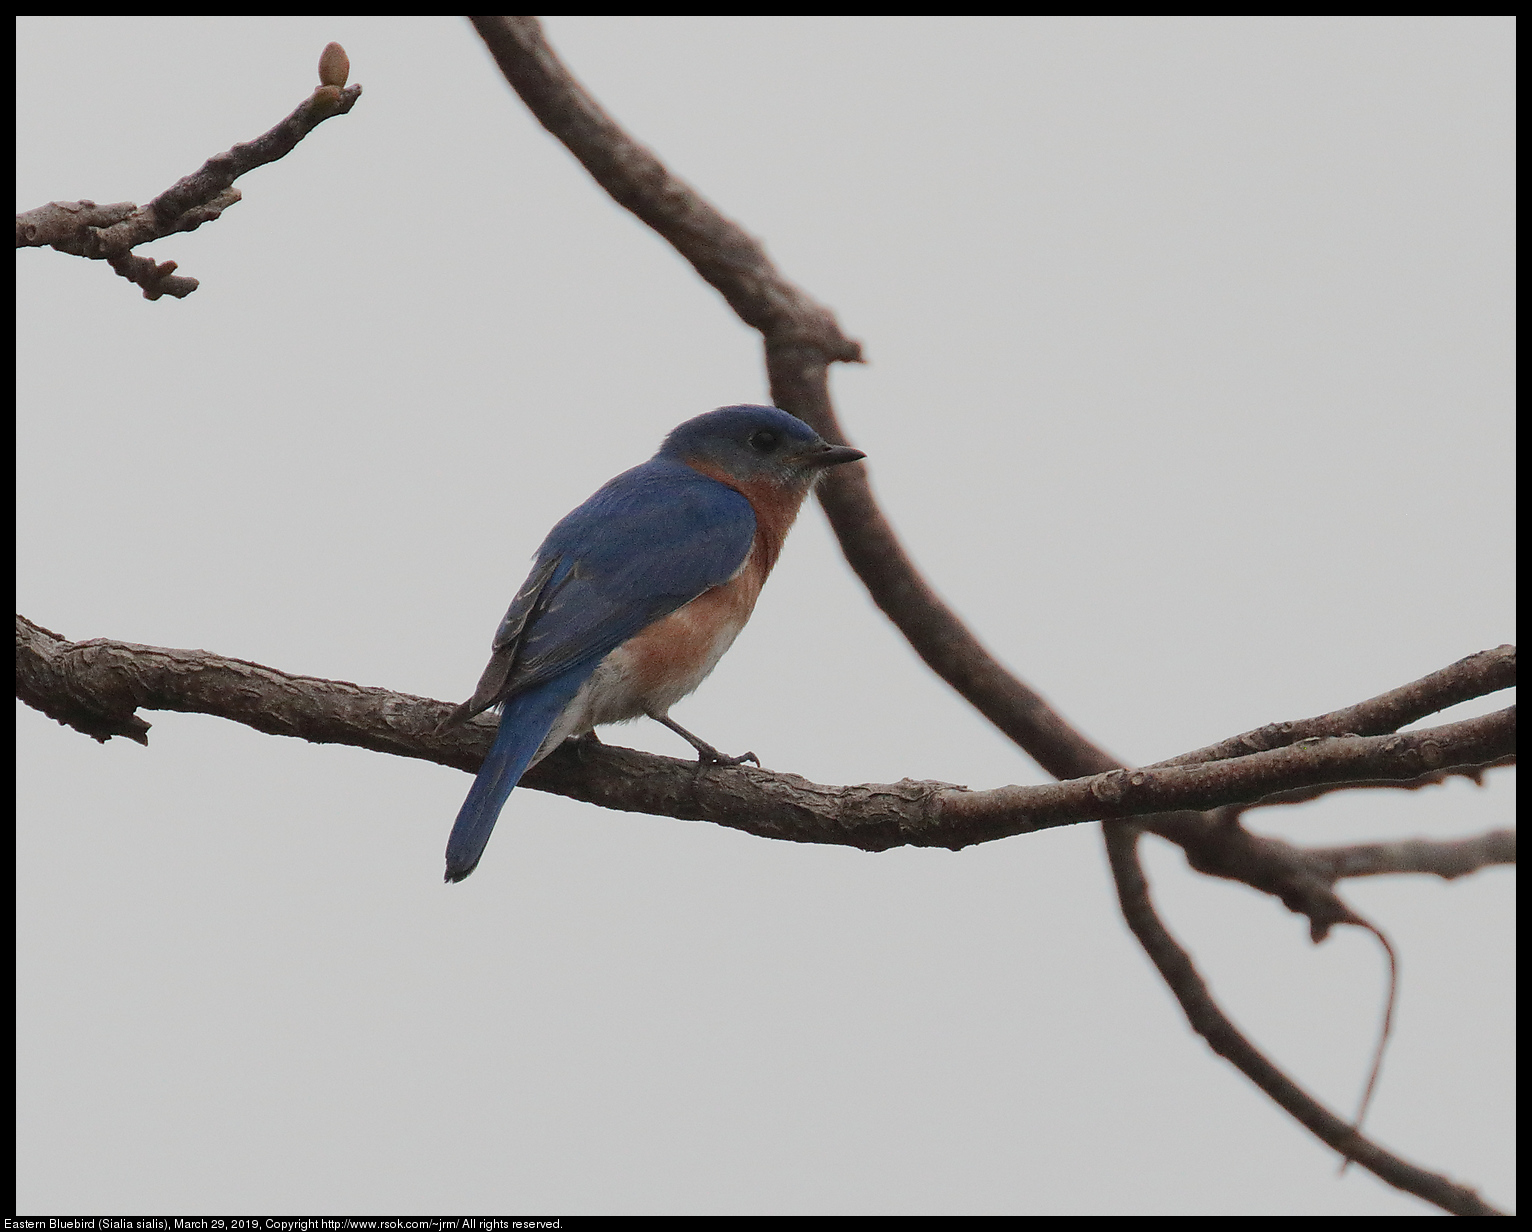 Eastern Bluebird (Sialia sialis), March 29, 2019